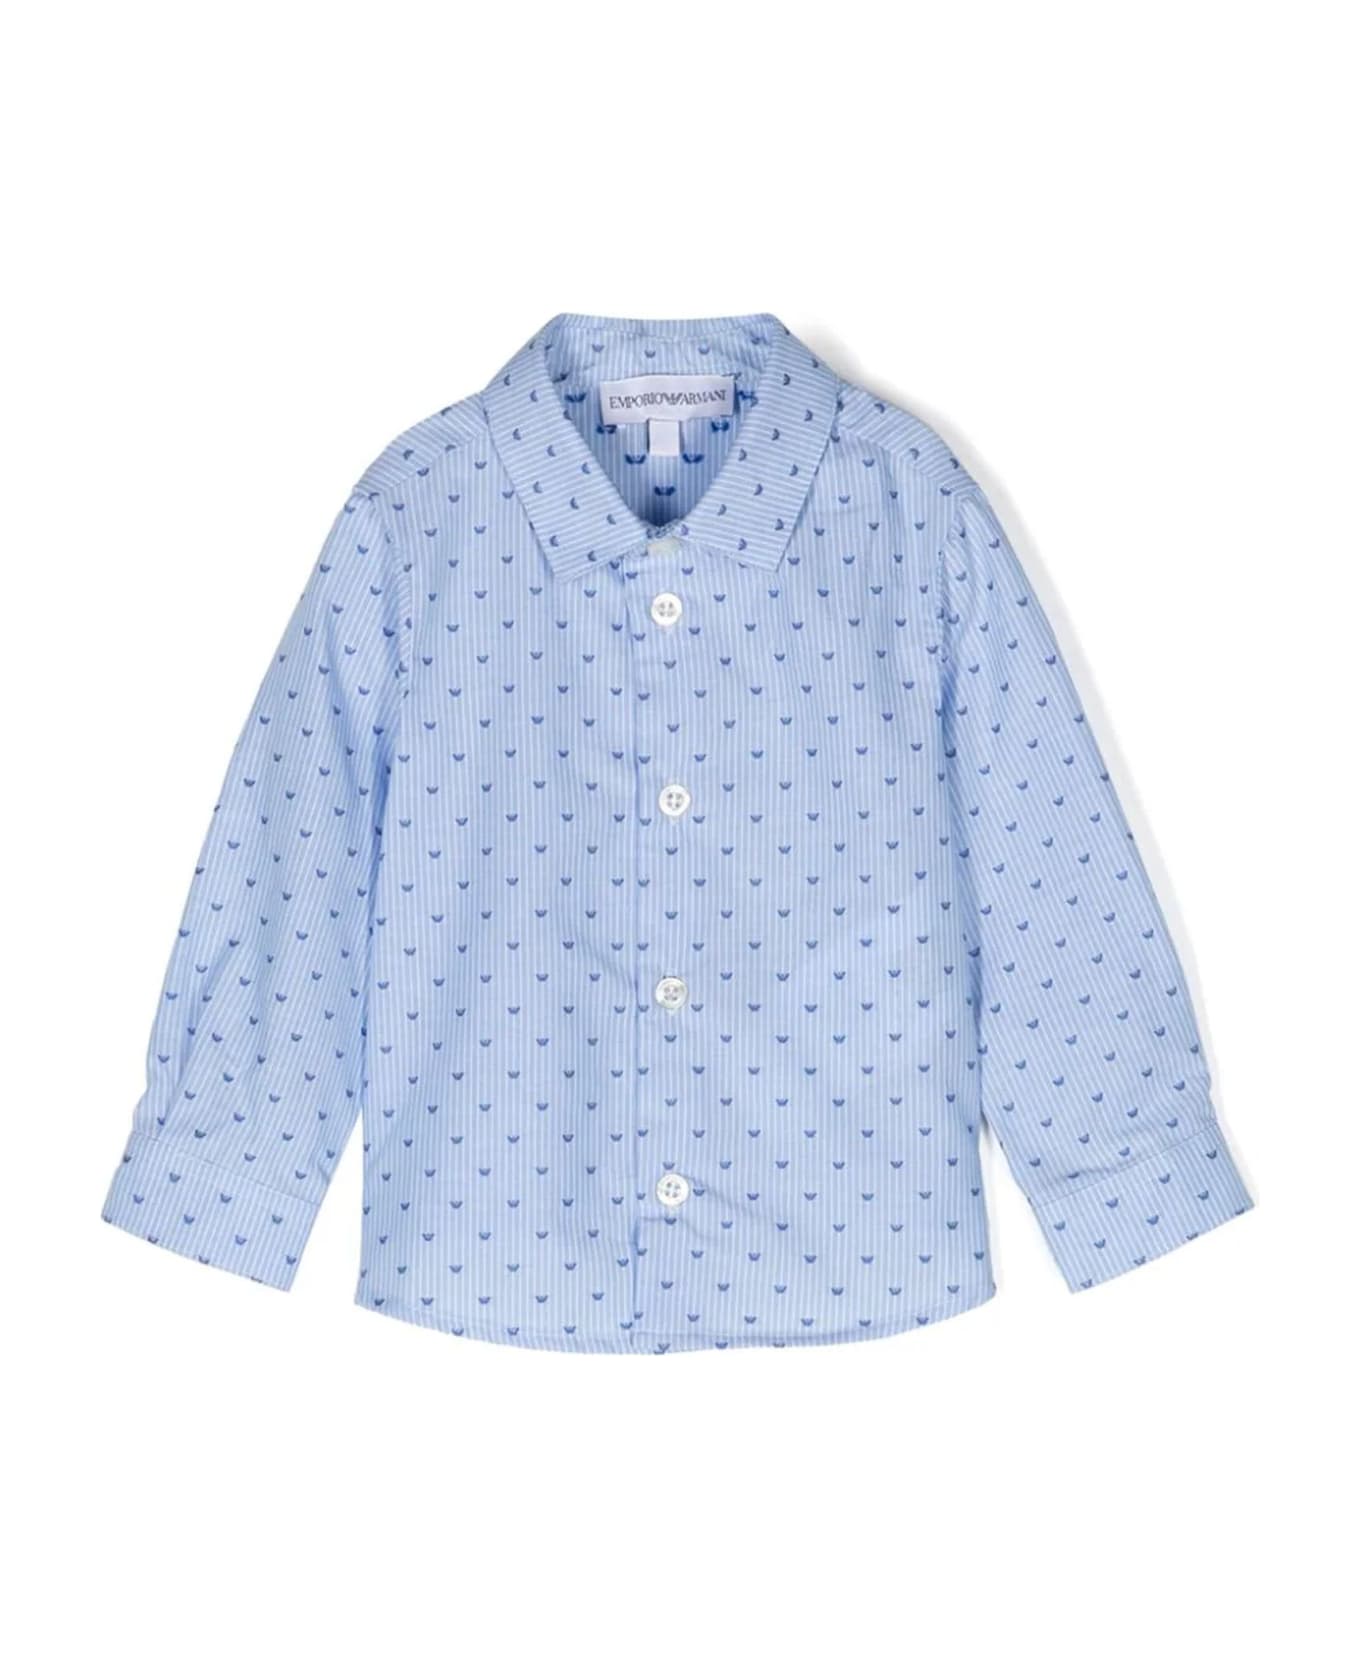 Emporio Armani Shirts Clear Blue - Clear Blue シャツ